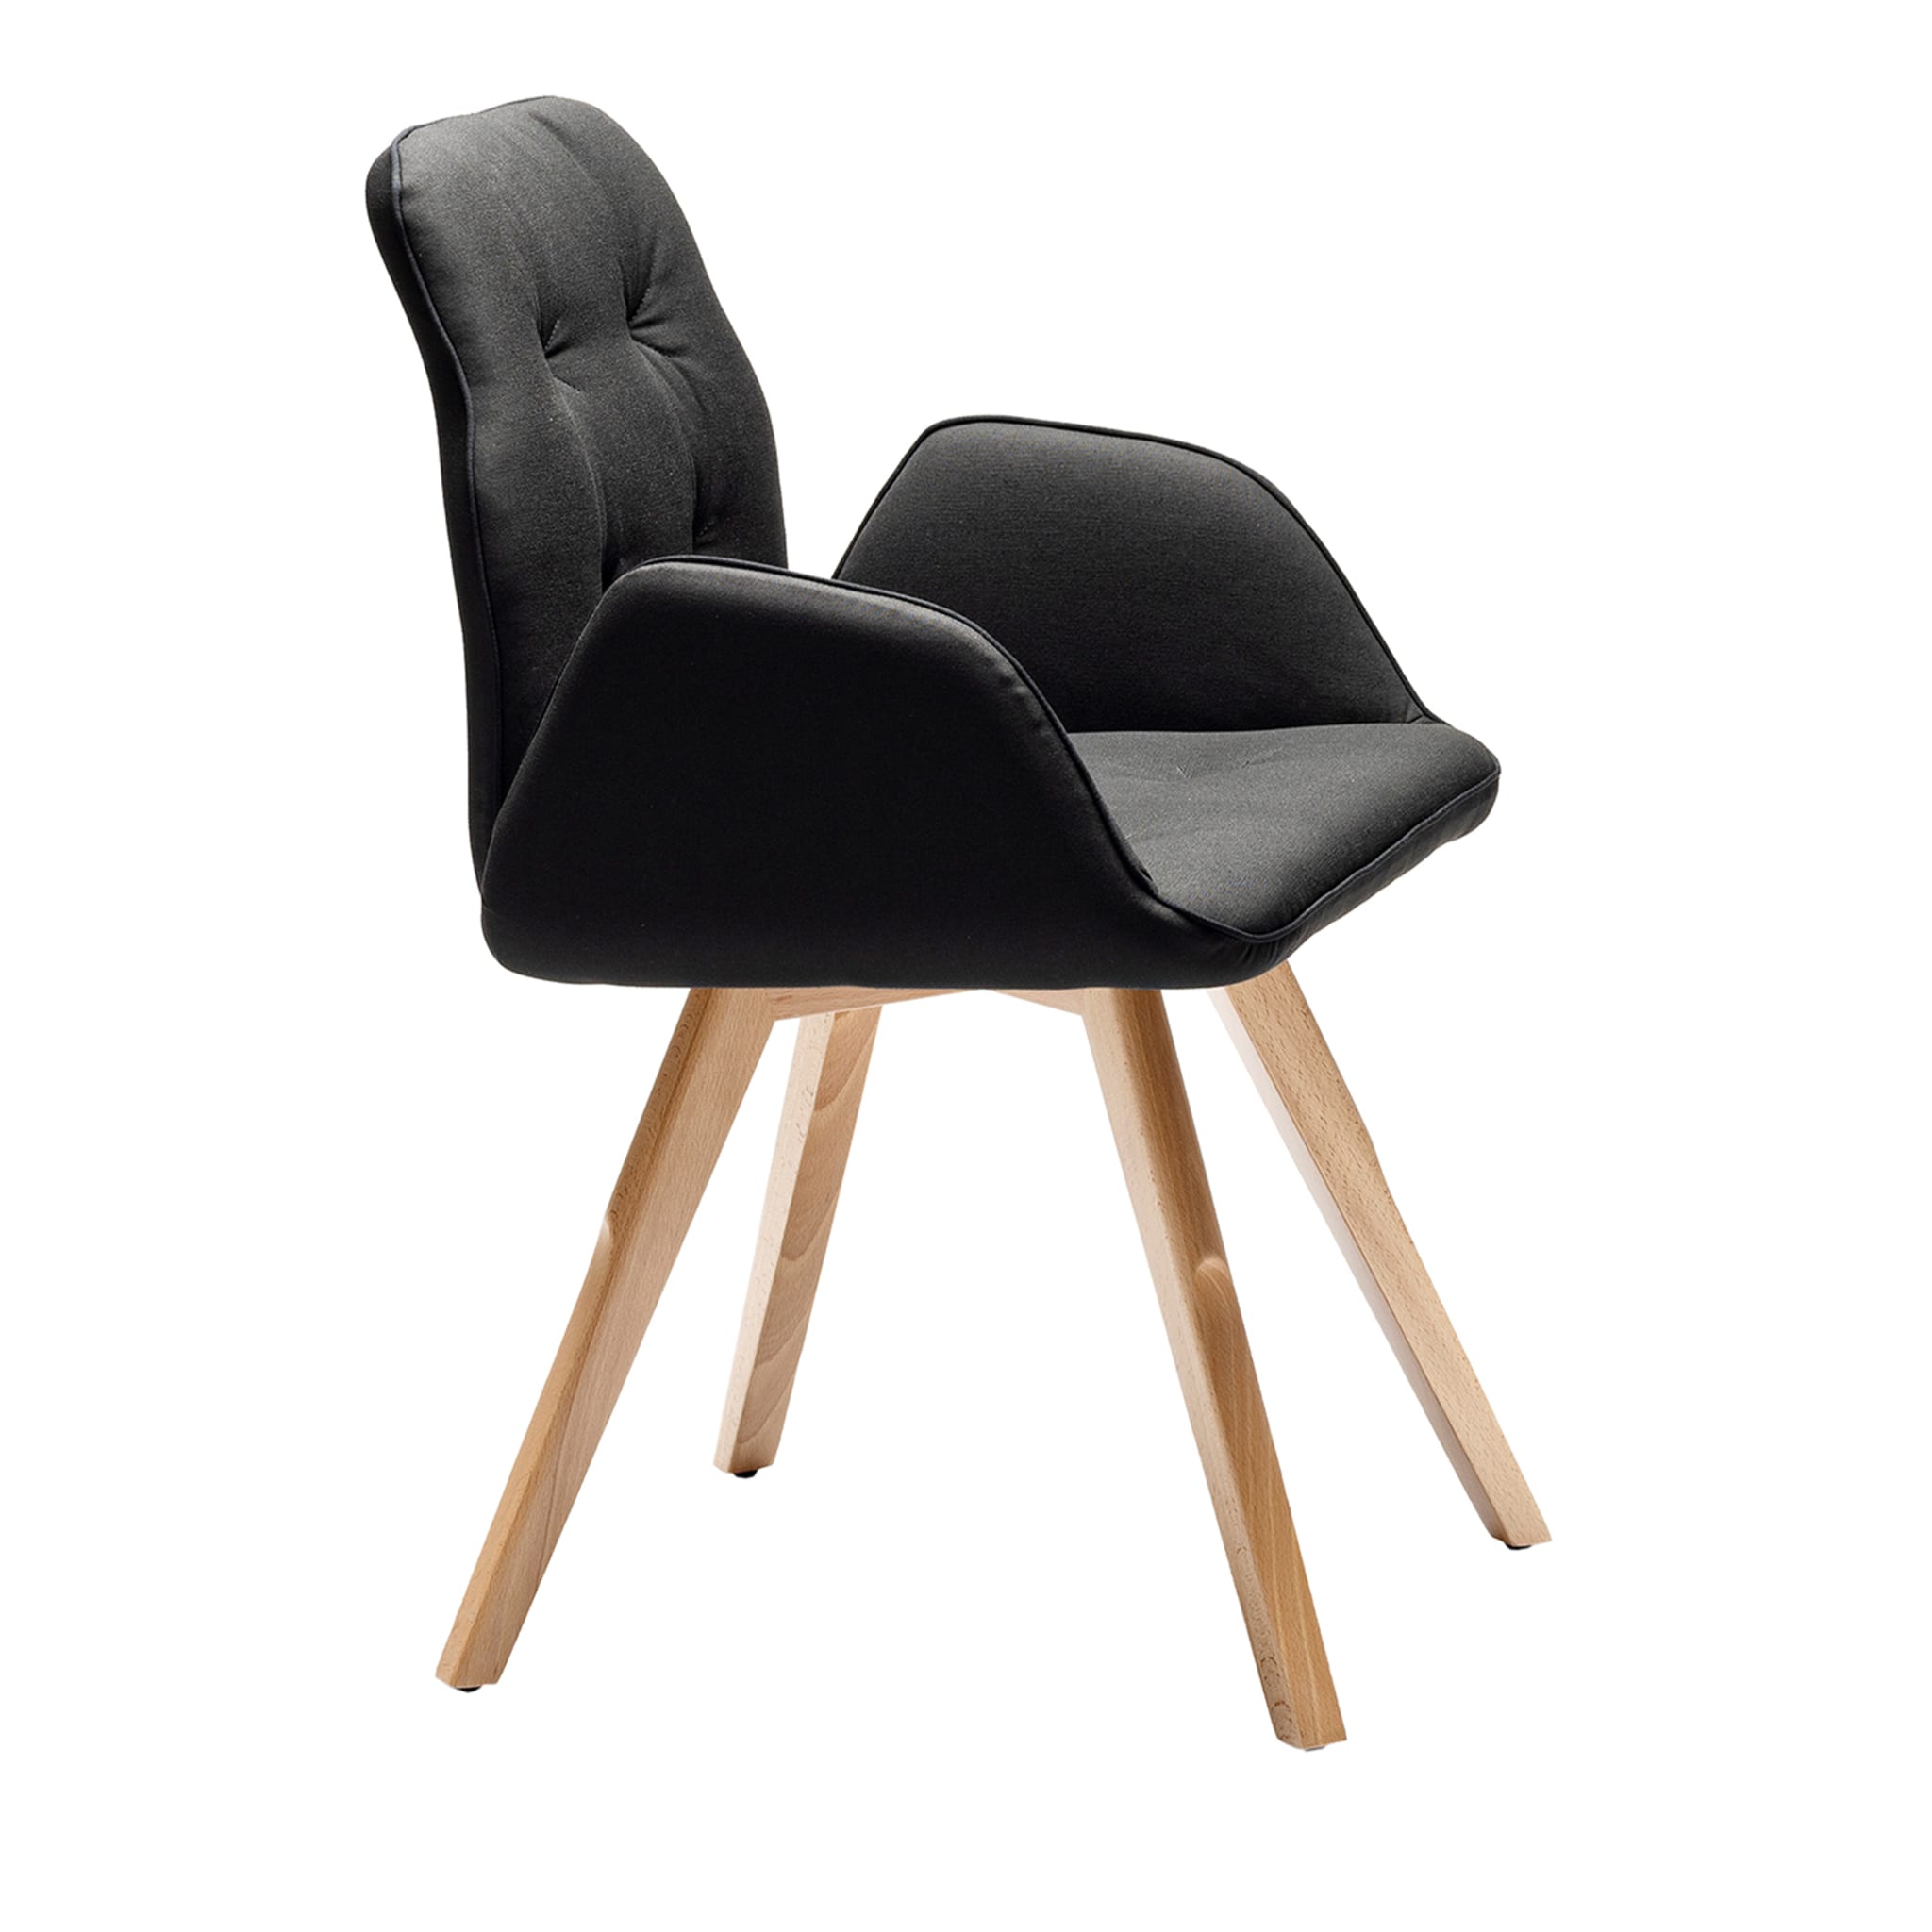 Betibù SP Black Chair by Dario Delpin - Main view